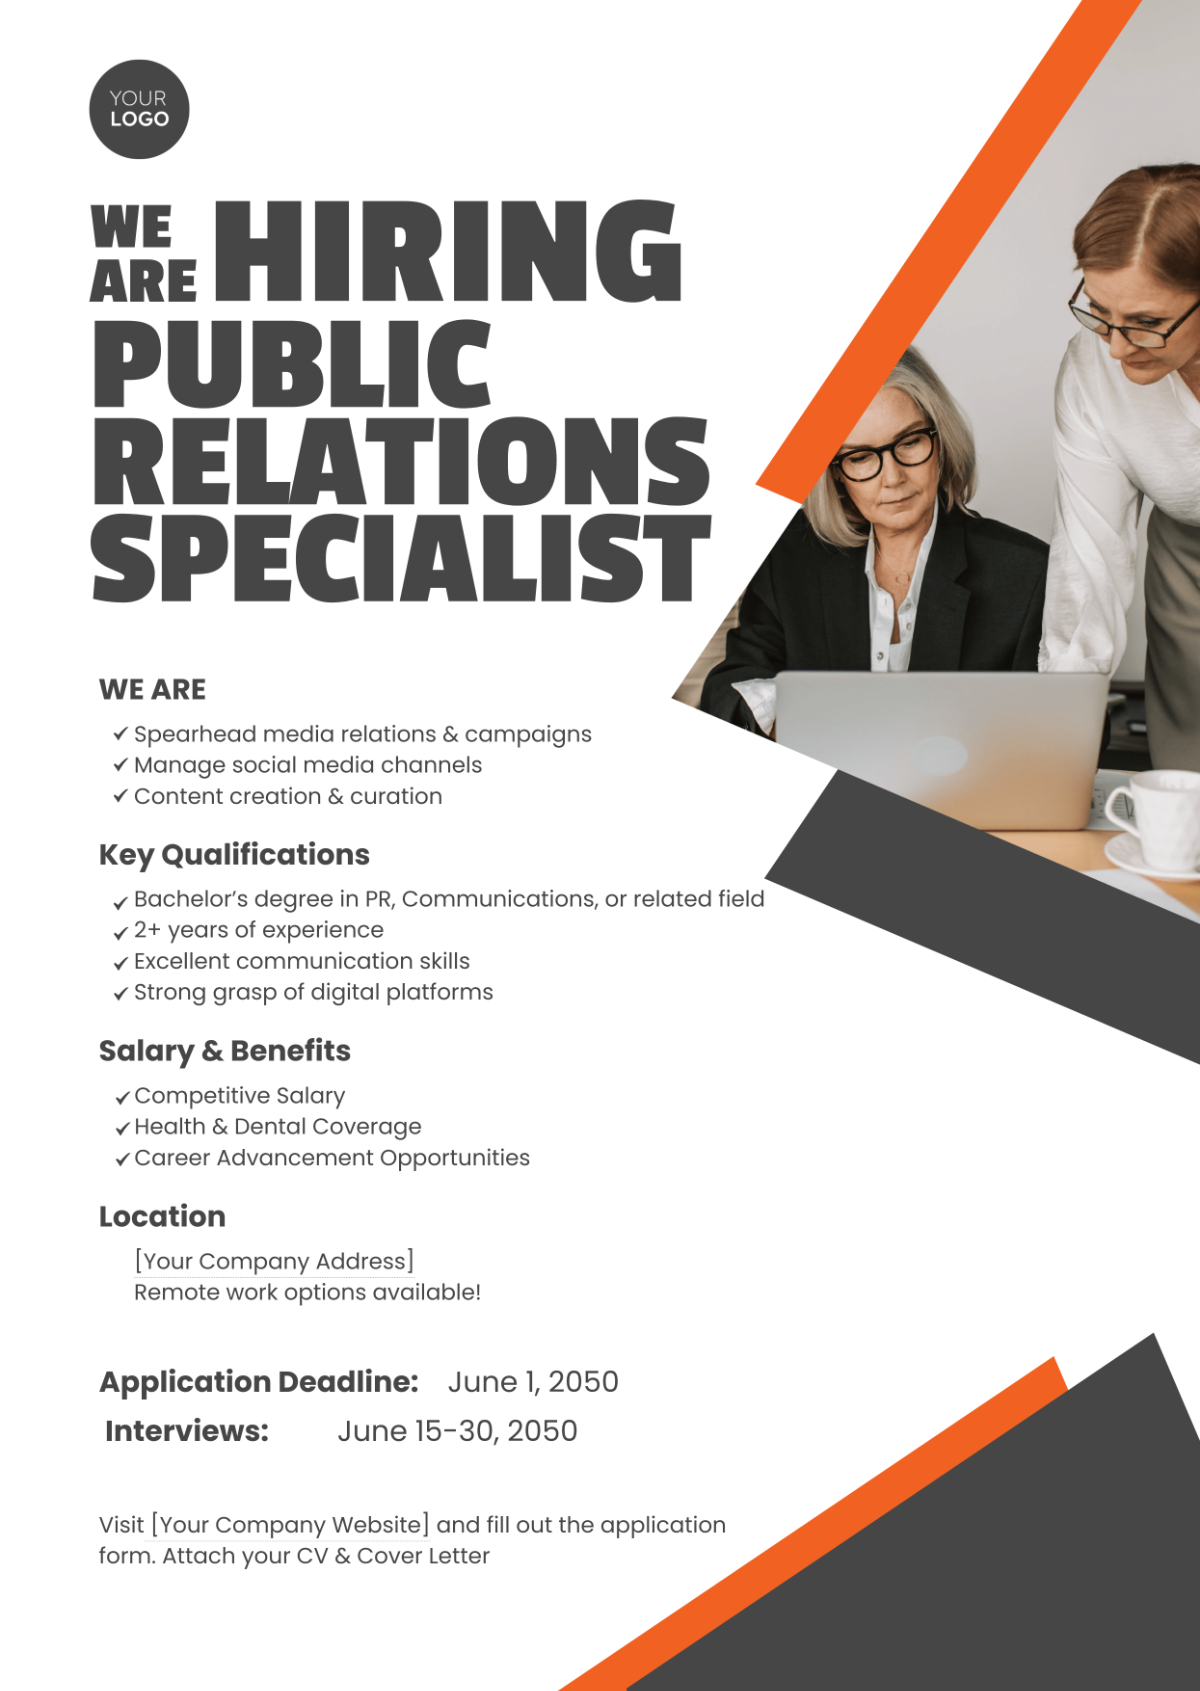 Public Relations Specialist Job Ad Template